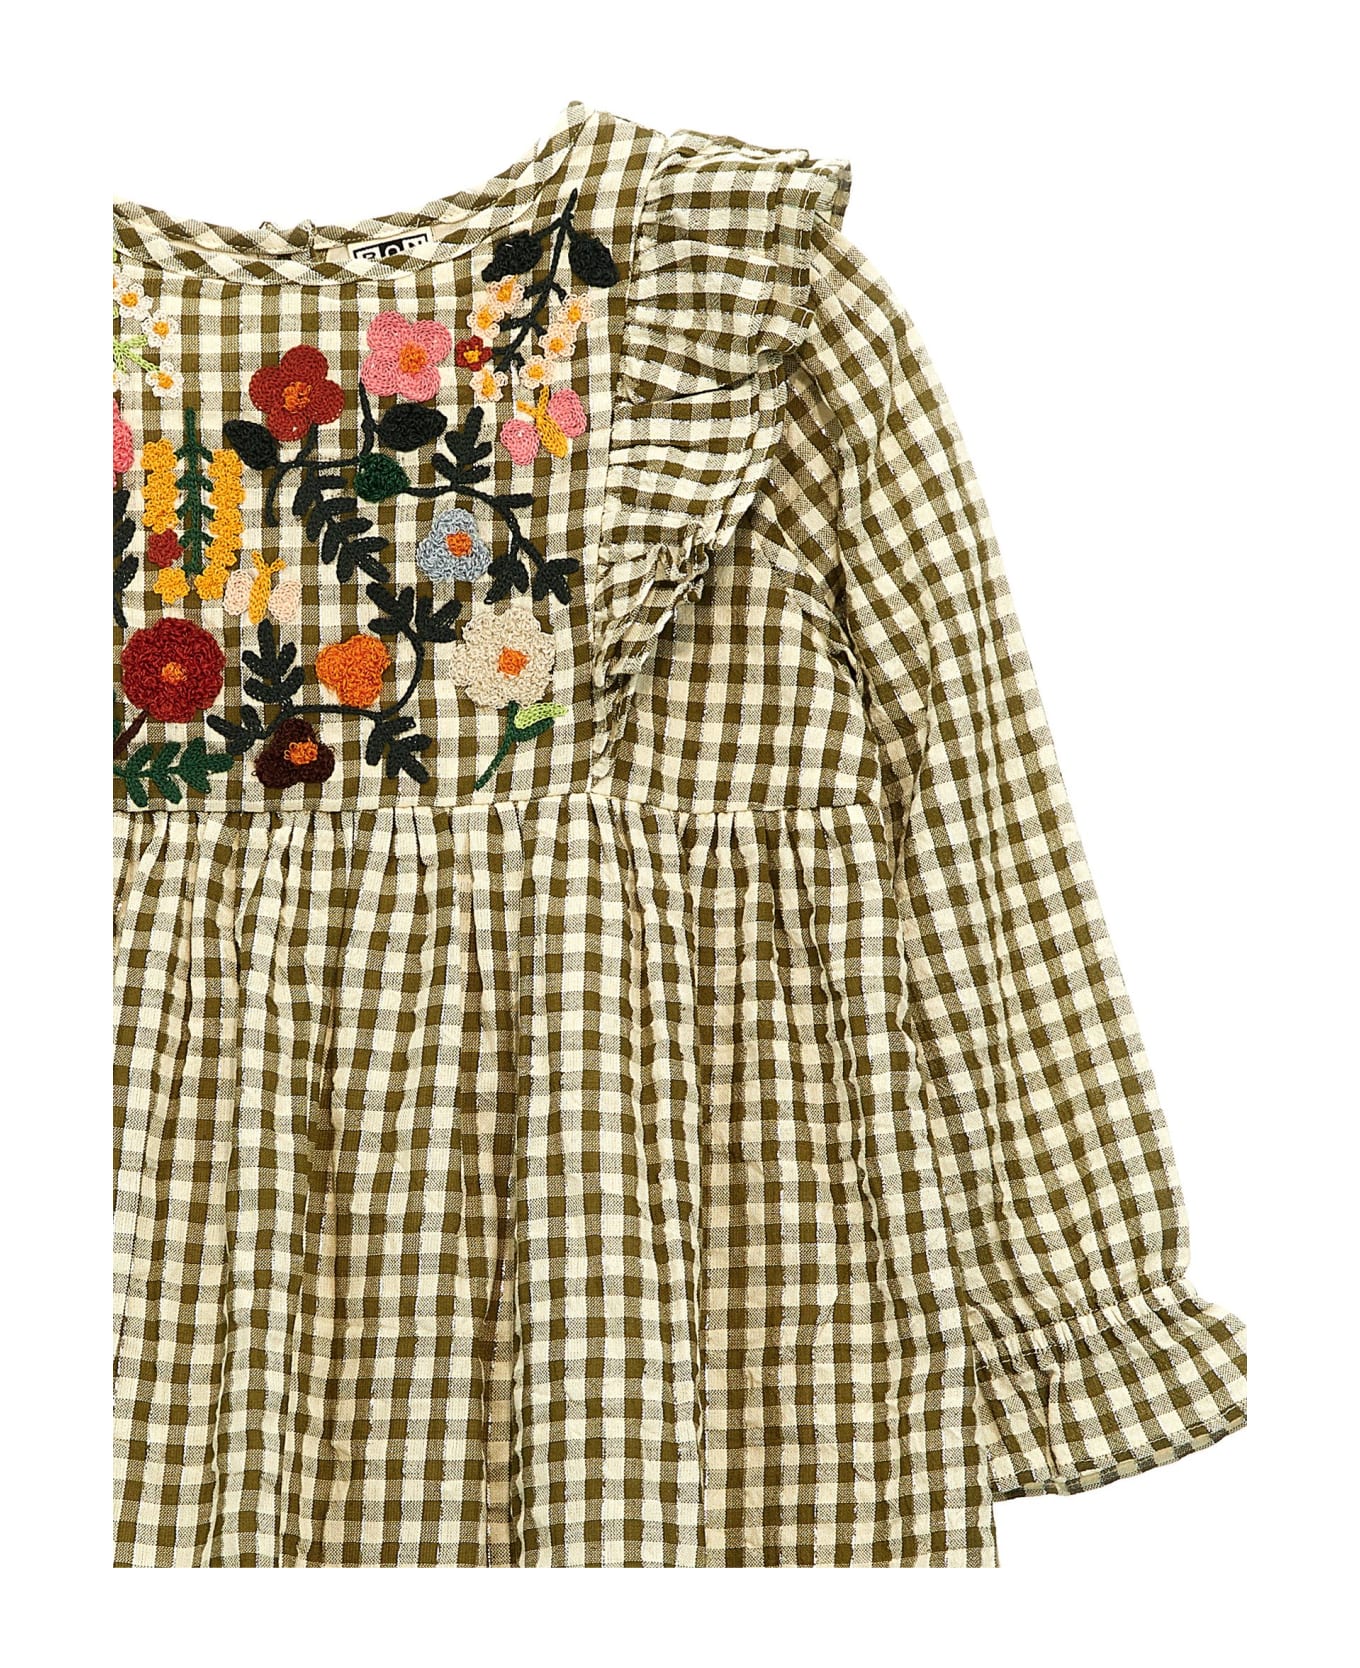 Bonton Embroidery Check Dress - Multicolor